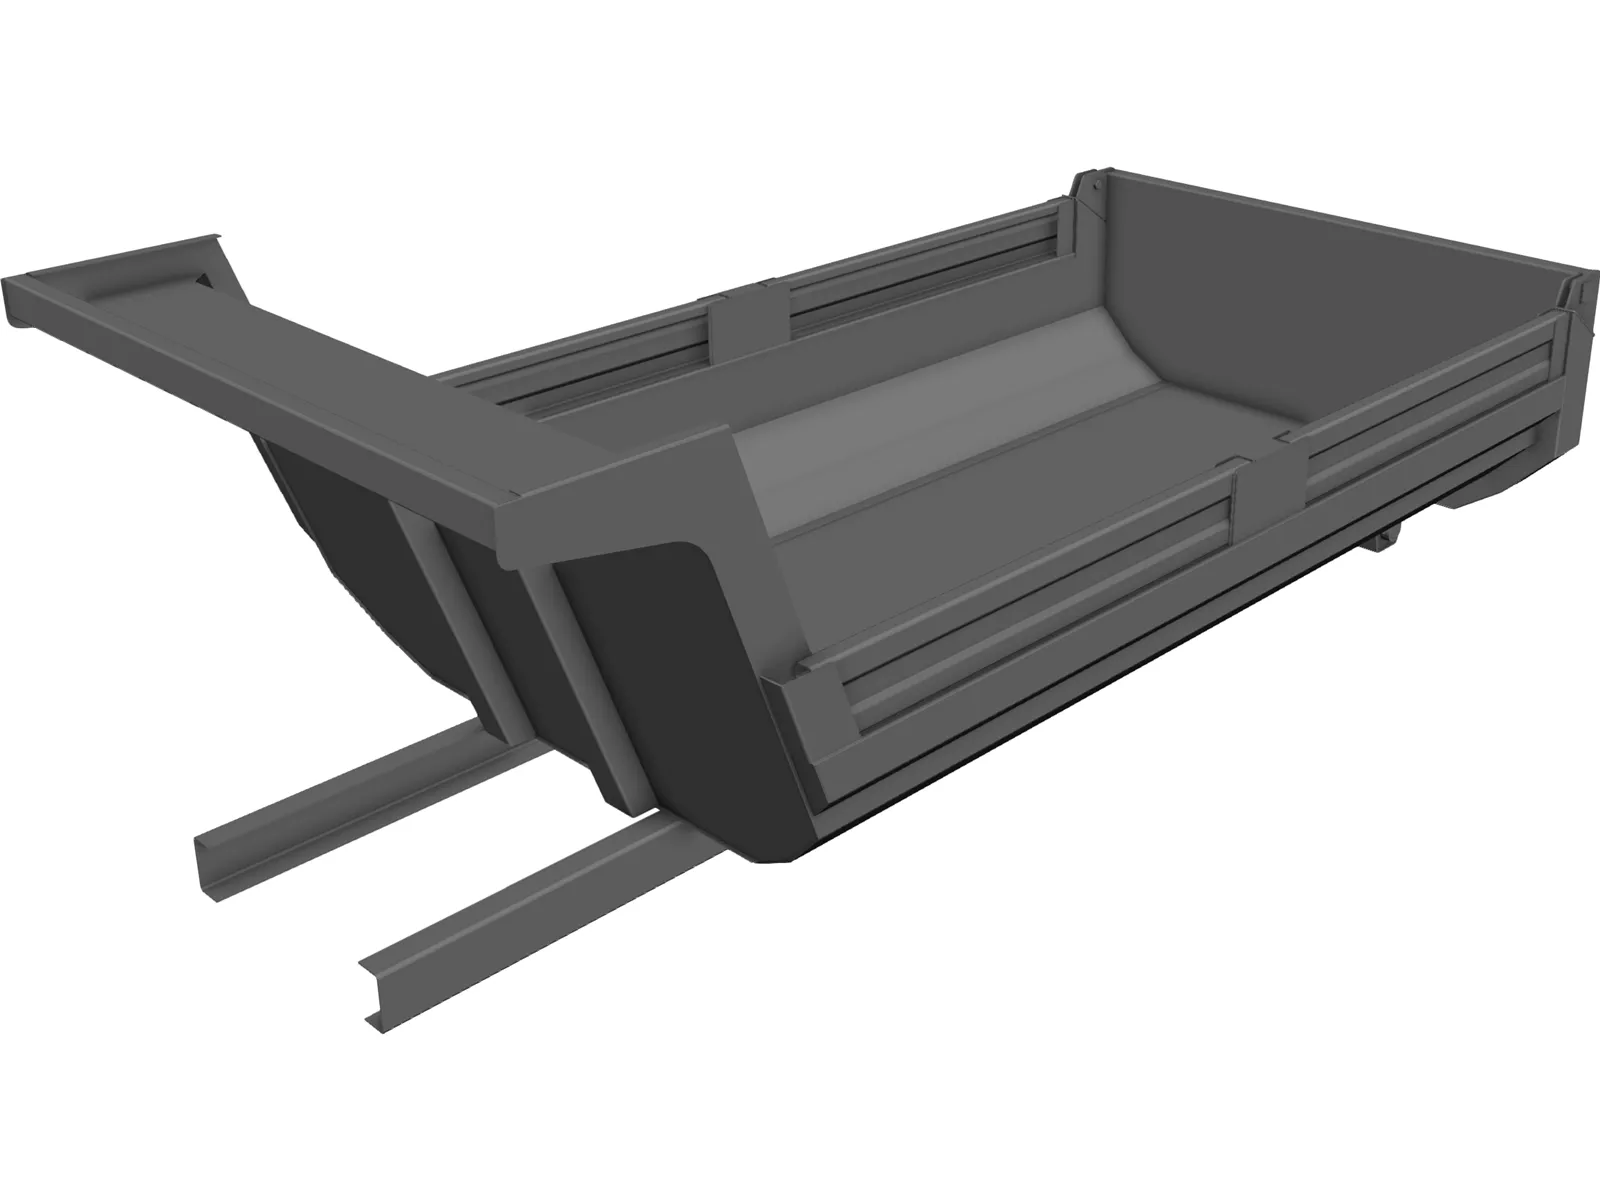 Truck Damper 3D Model